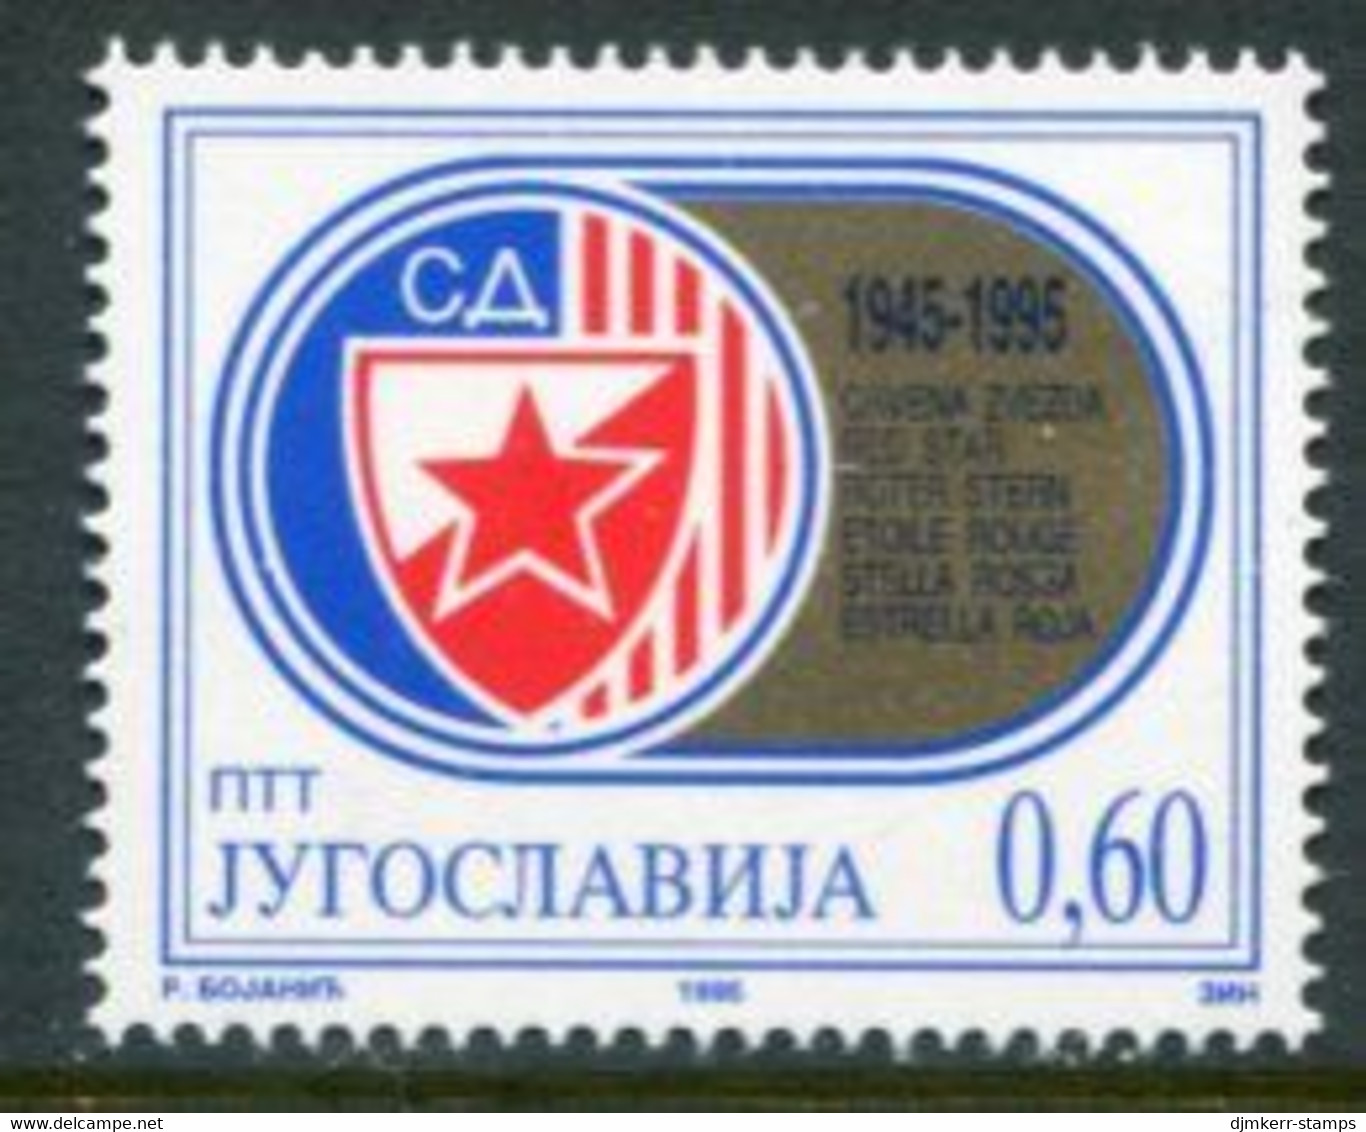 YUGOSLAVIA 1995 Red Star Sports Club MNH / **.  Michel 2706 - Neufs